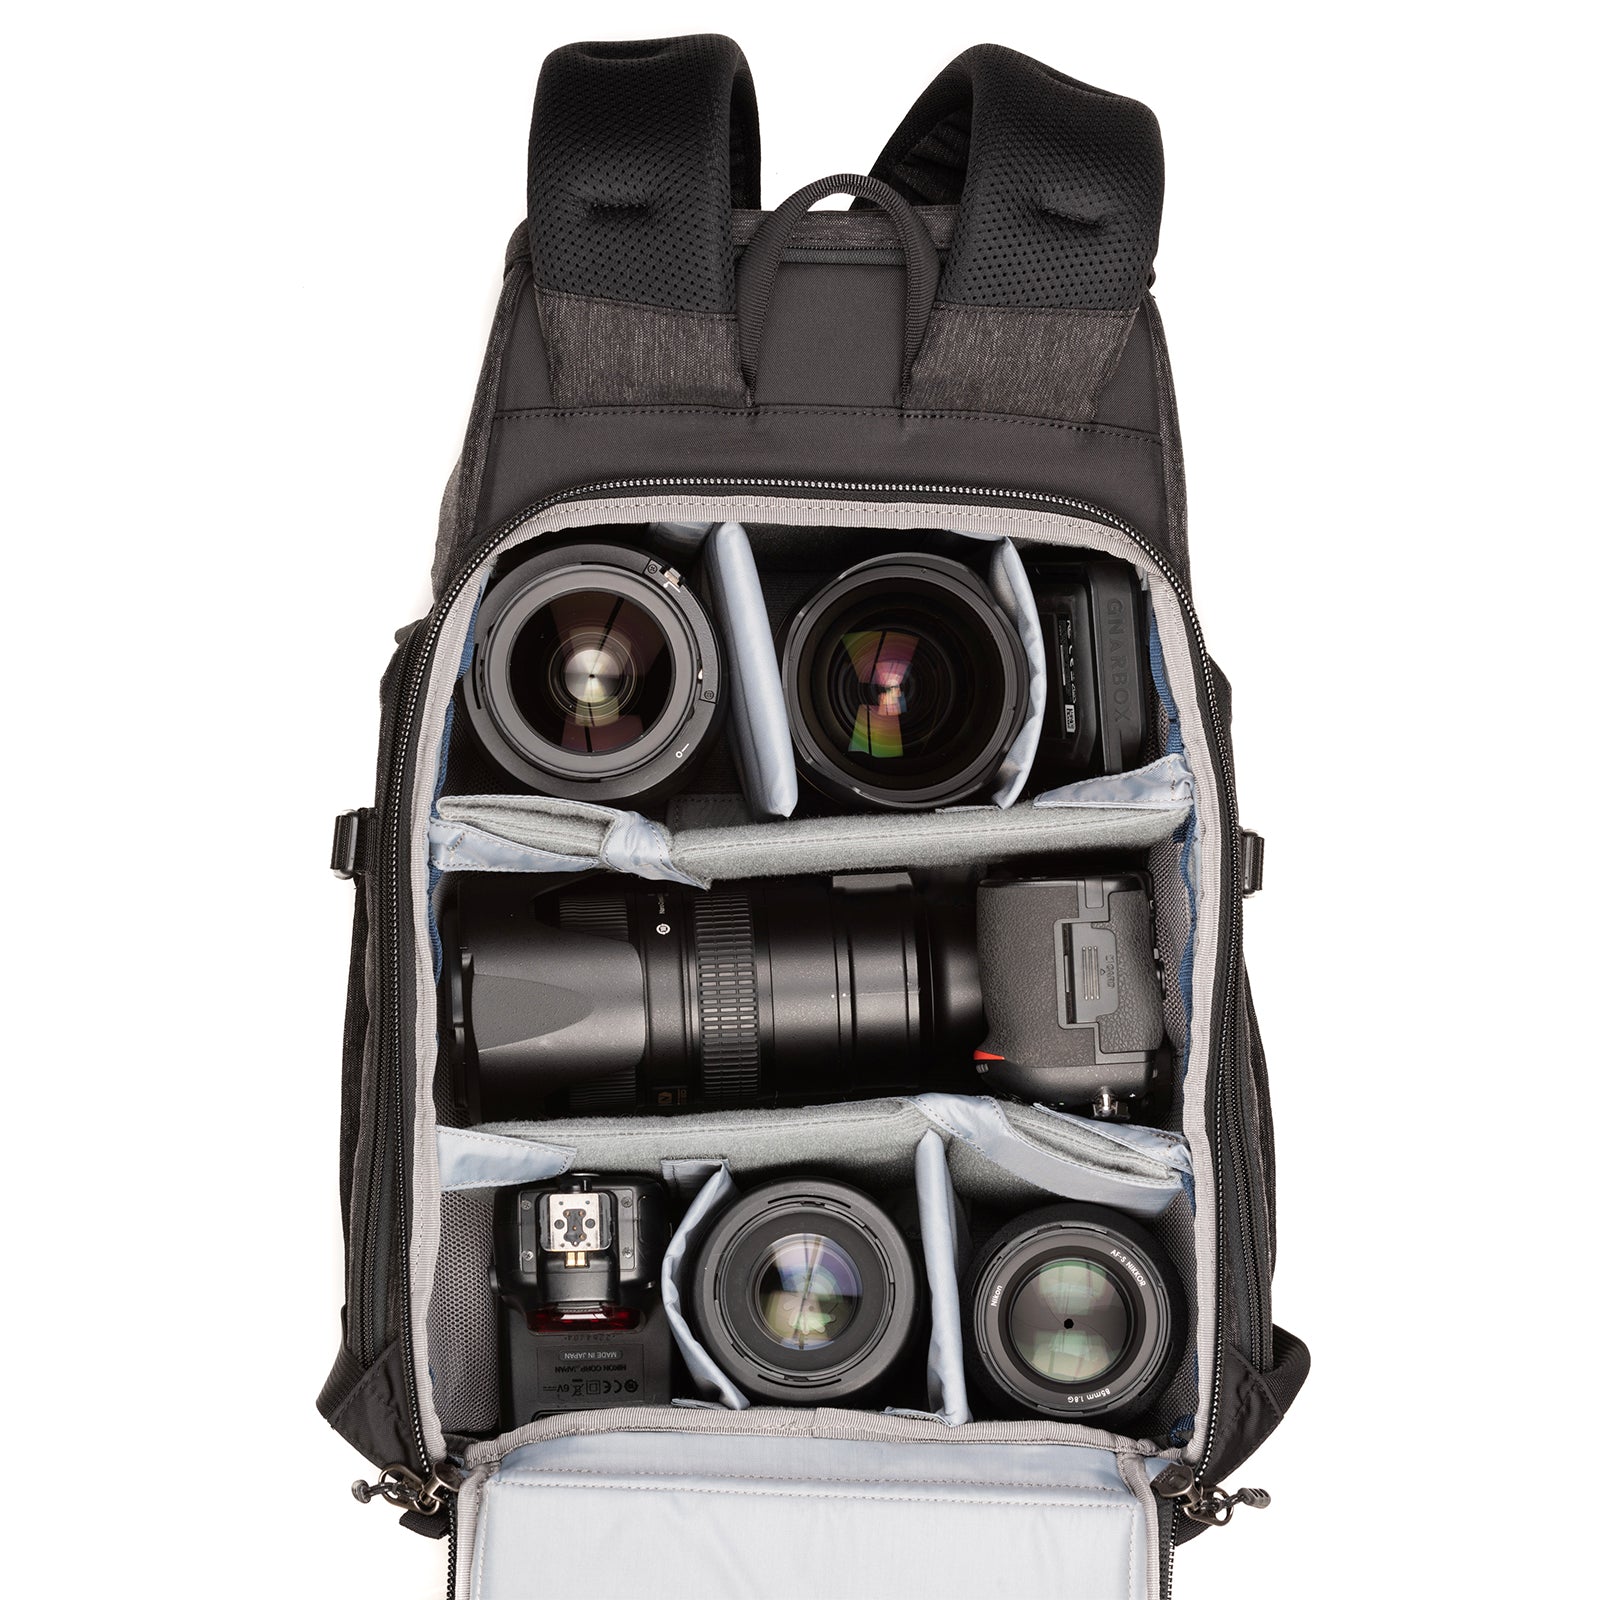 Nikon D750 with 70–200mm f/2.8 attached, 24–70mm f/2.8, 14–24mm f/2.8, 105mm f/2.8 macro, 35mm f/1.4, SB900 strobe and a 15” laptop